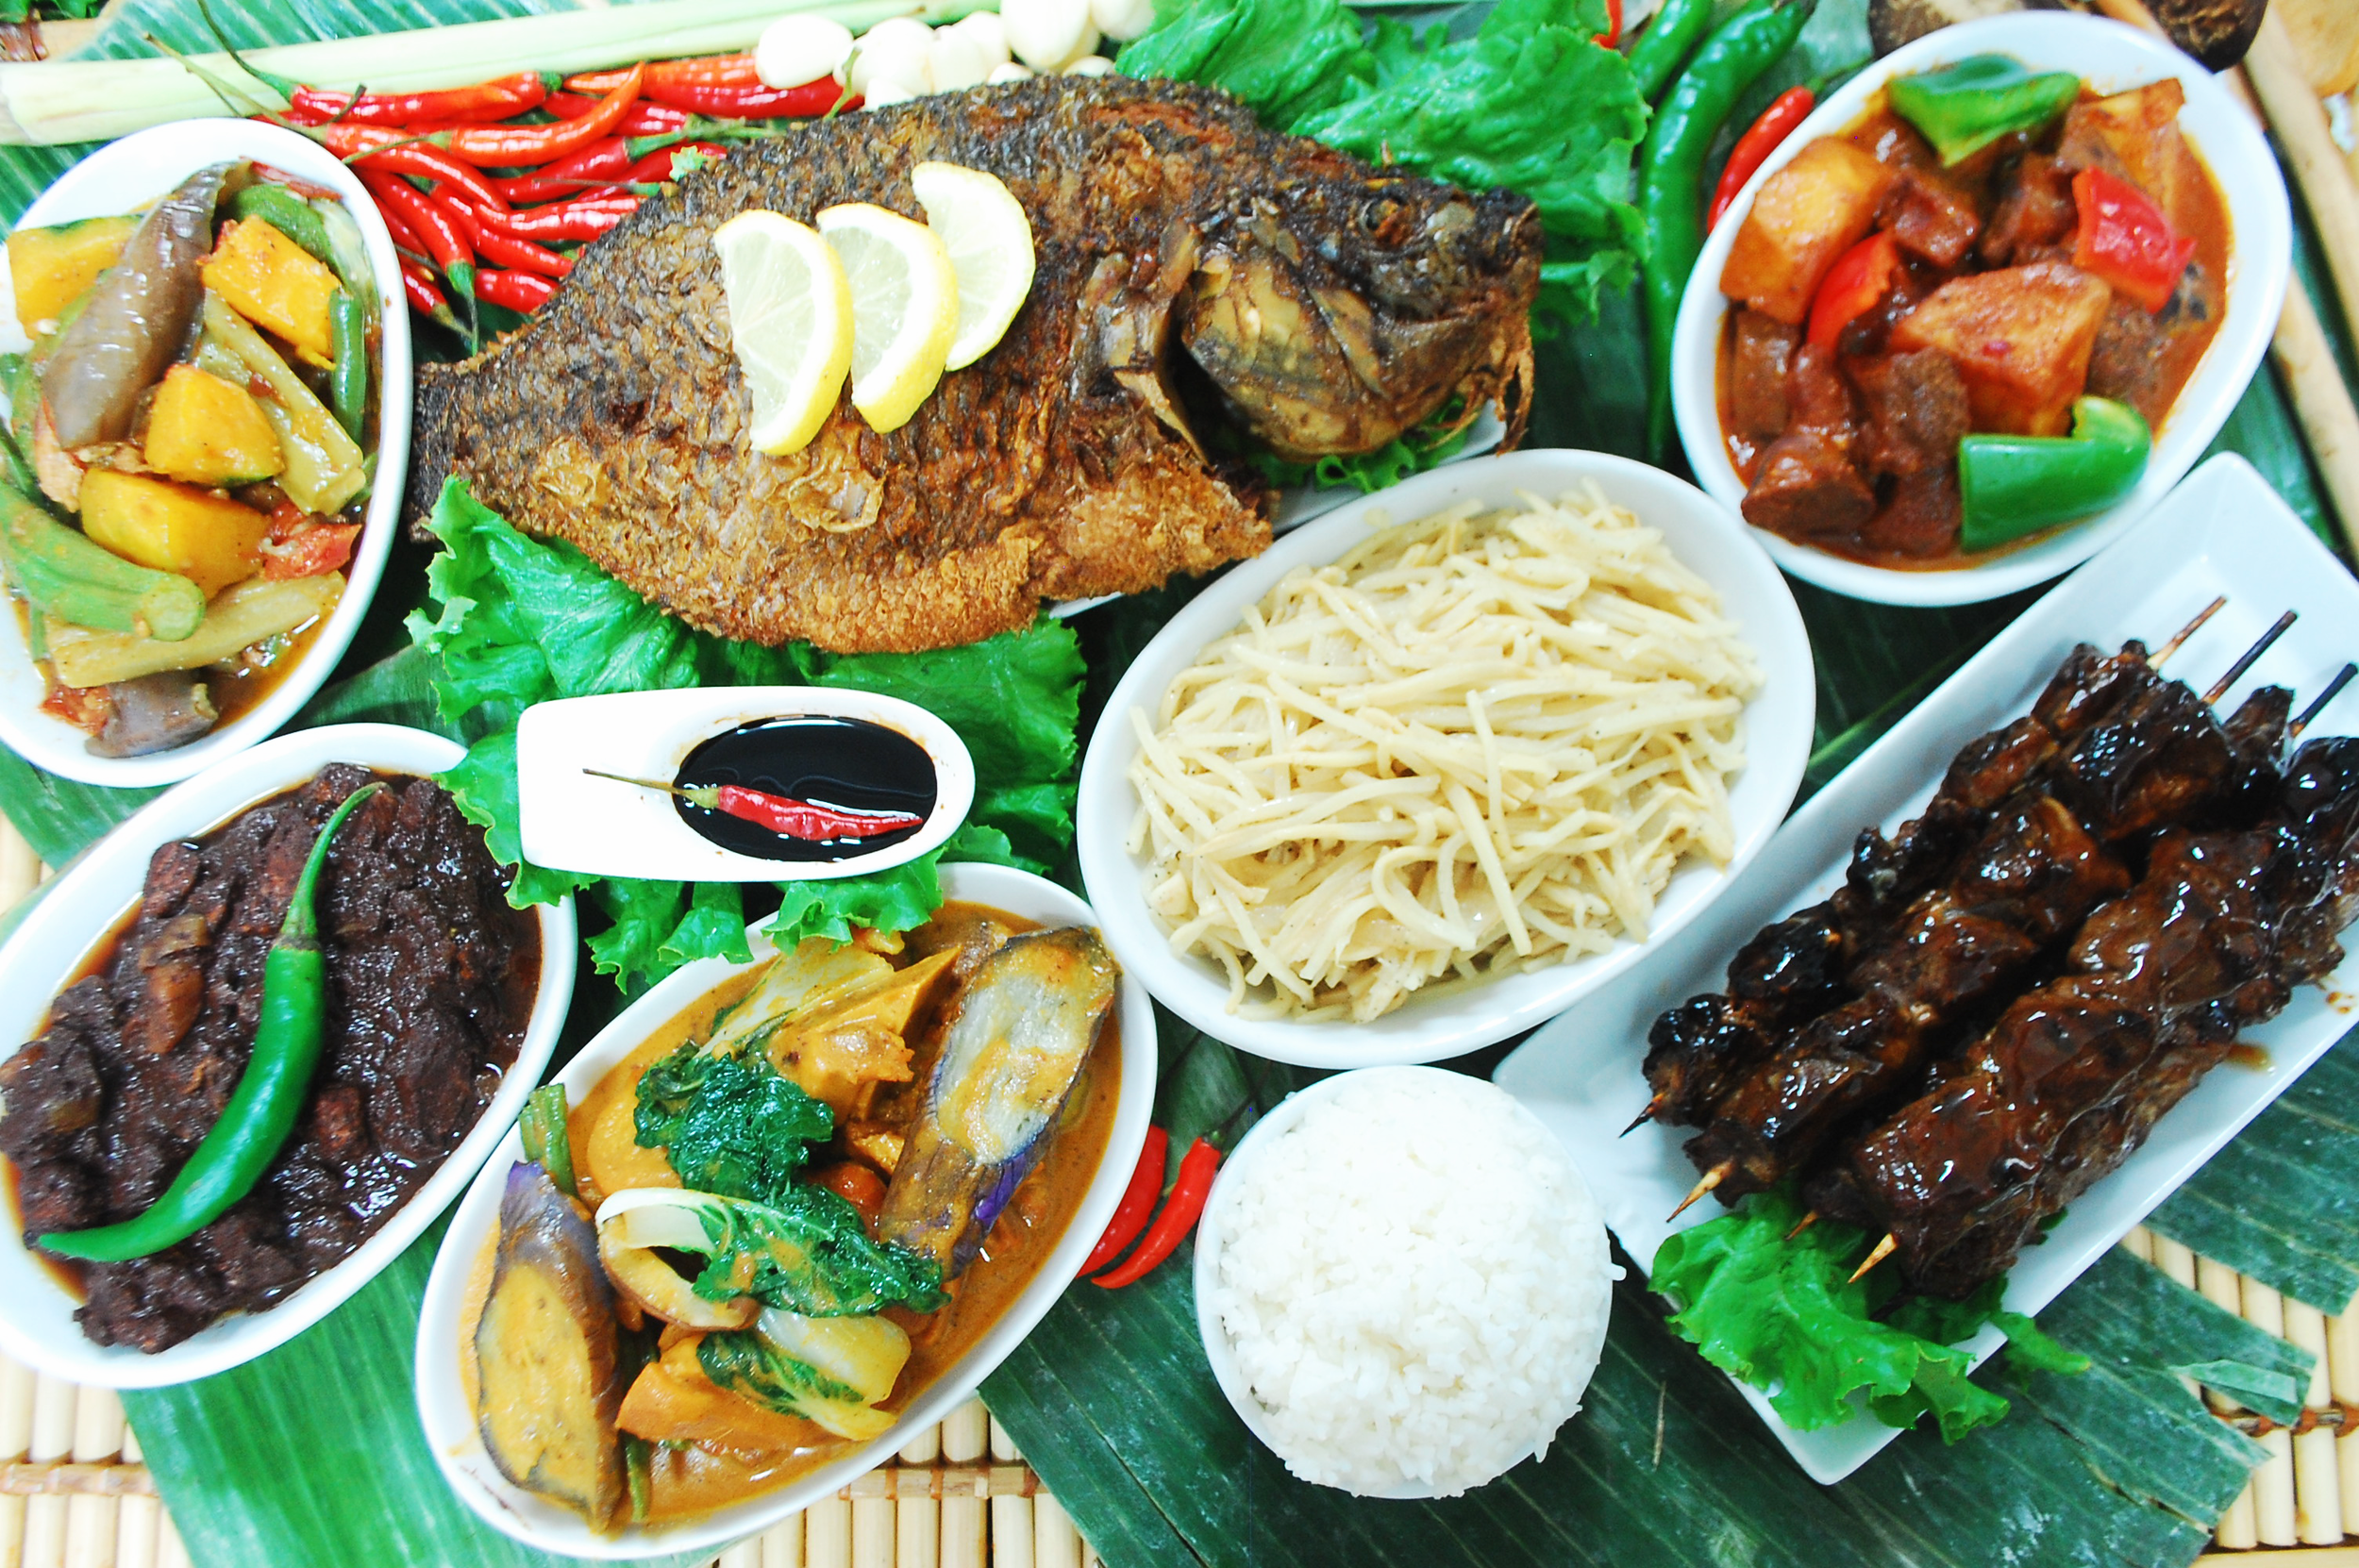 ⭐ Expérience de la cuisine de rue à Manille ⭐